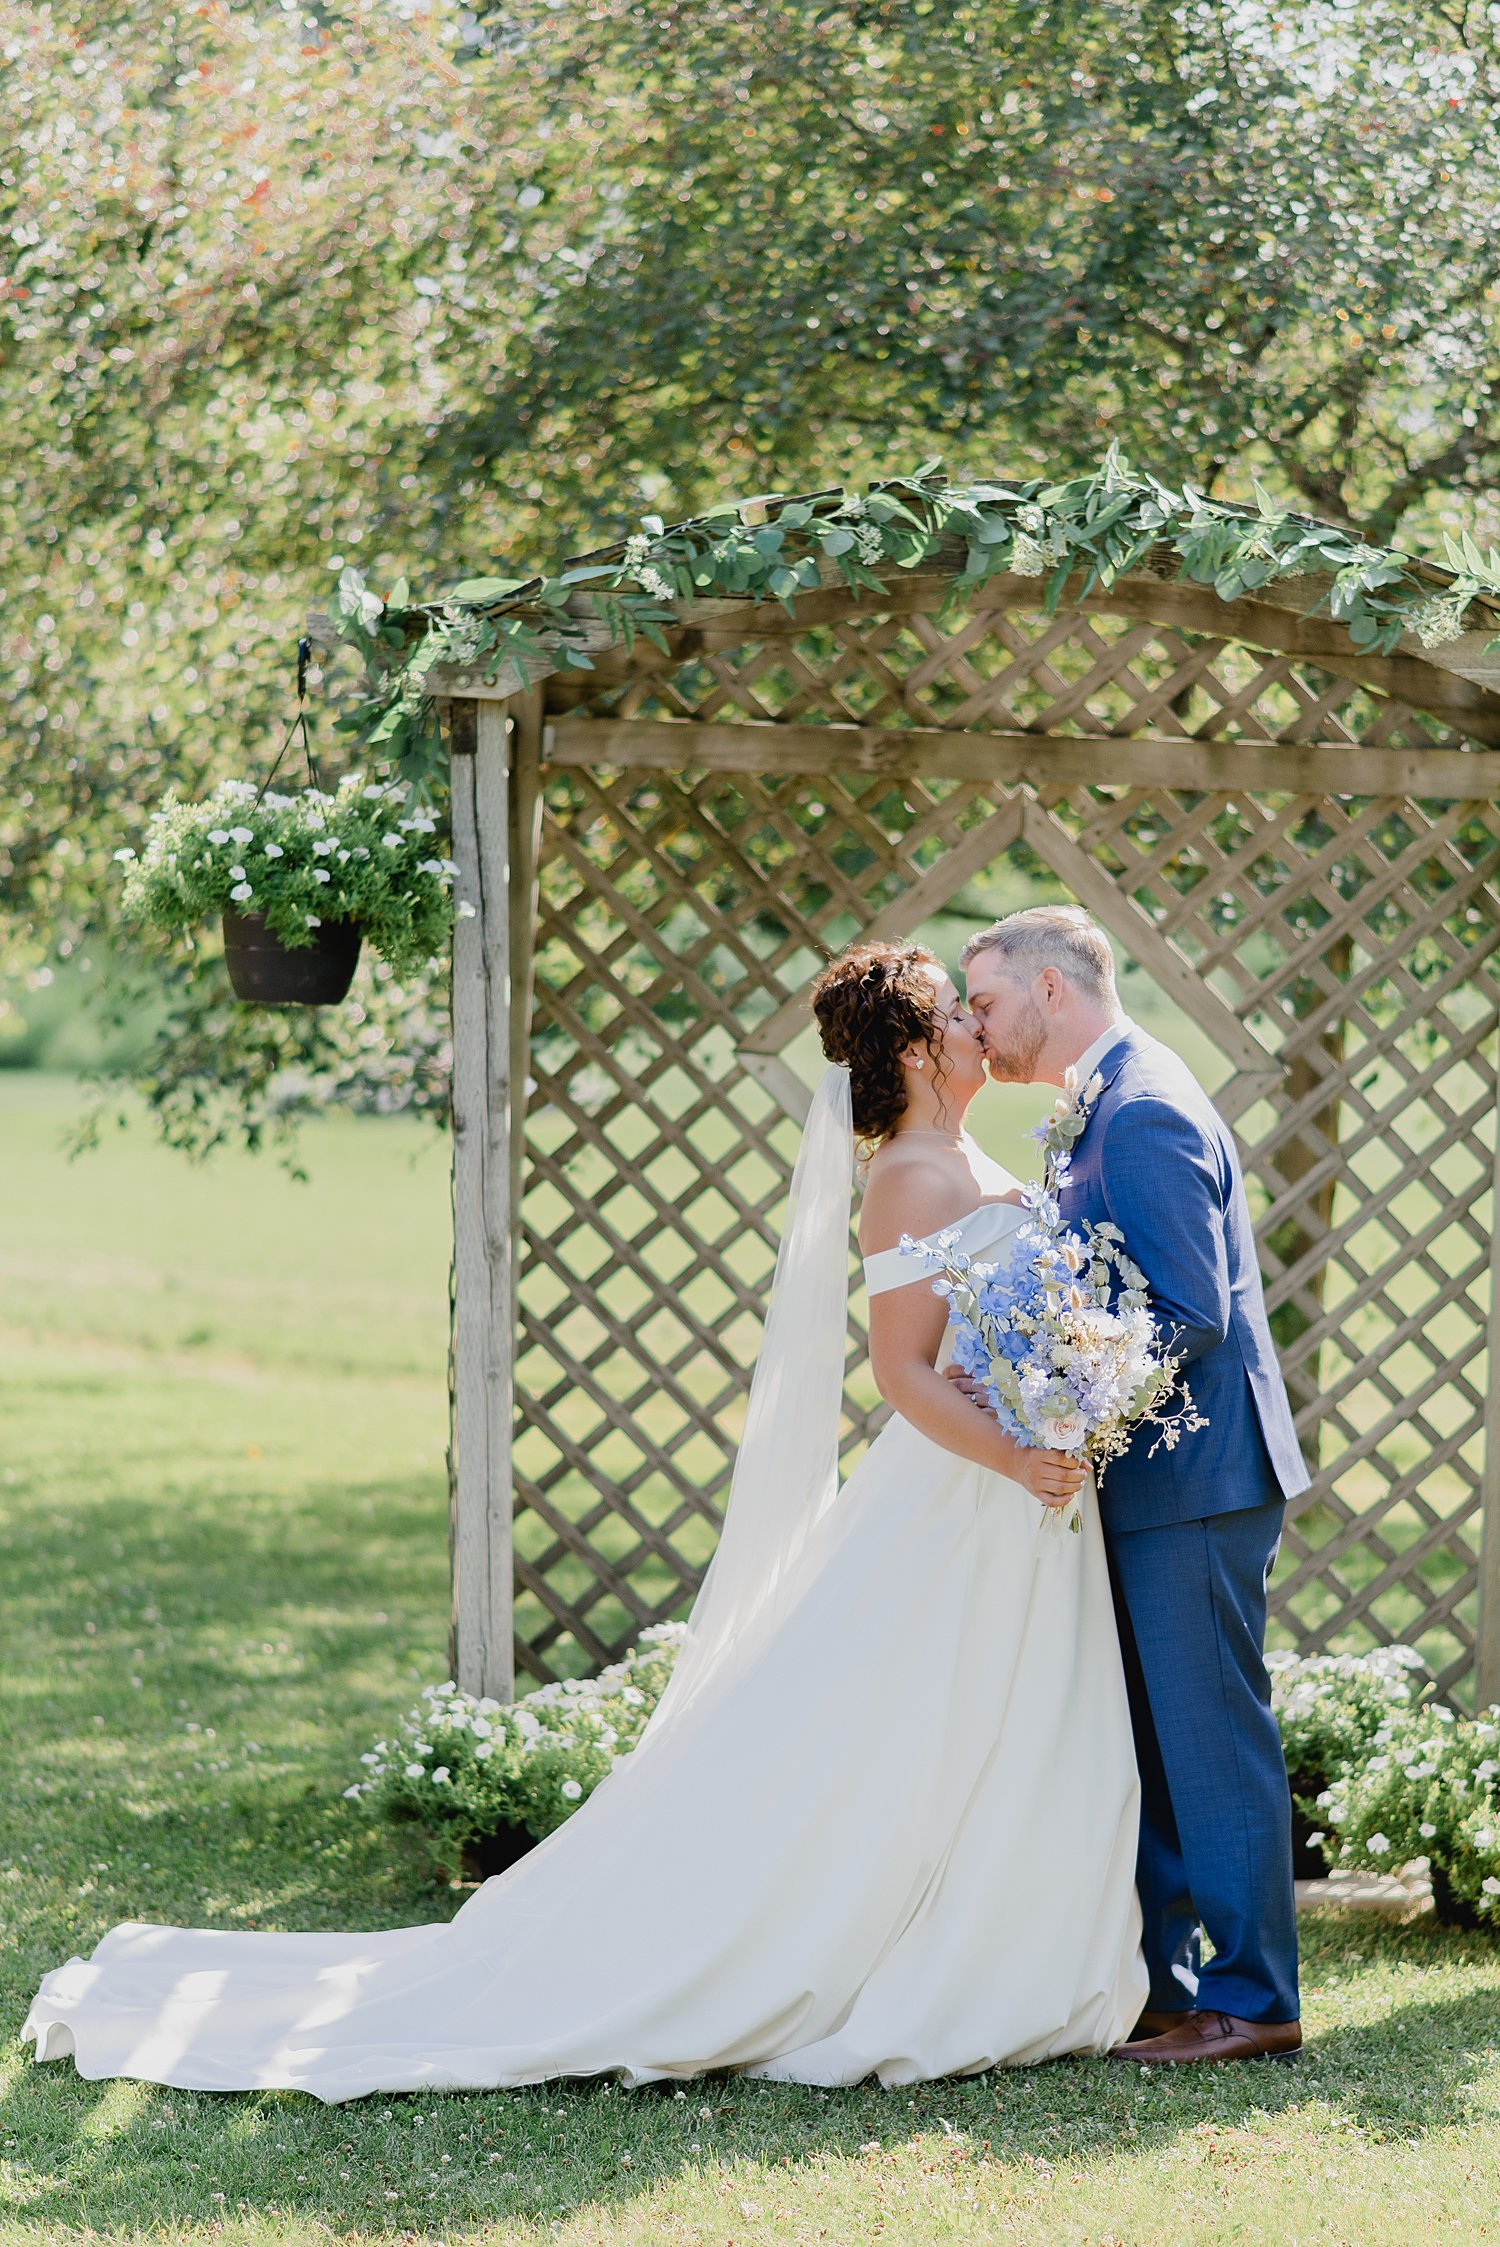 Elegant Summer Backyard Tented Wedding in Sydenham, Ontario | Prince Edward County Wedding Photographer | Holly McMurter Photographs_0051.jpg